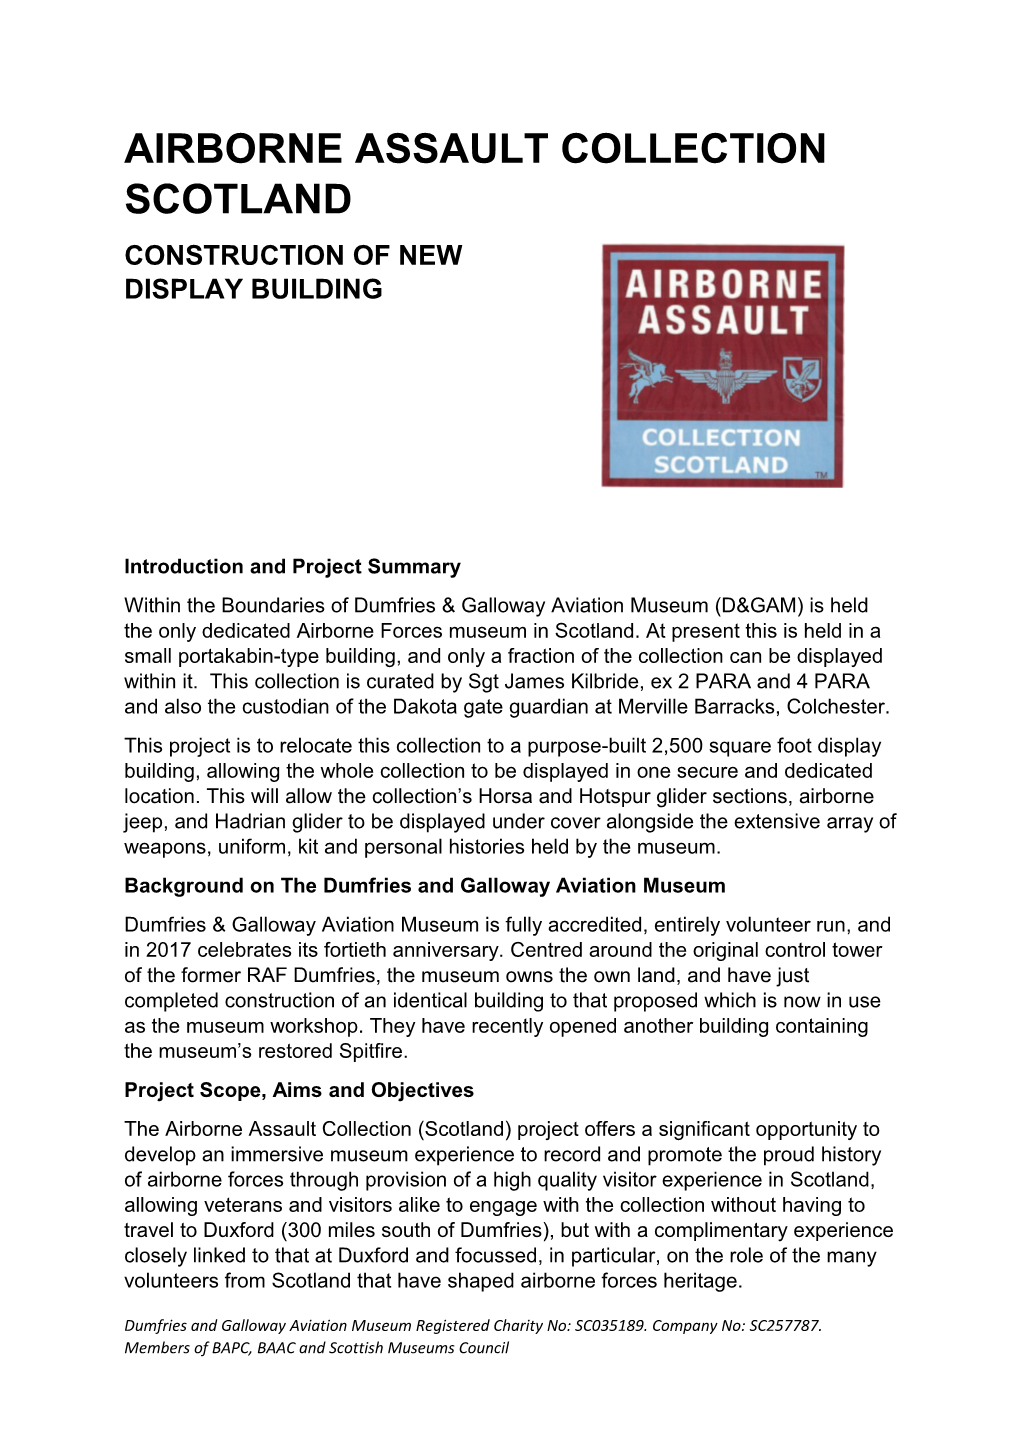 Airborne Assault Collection Scotland